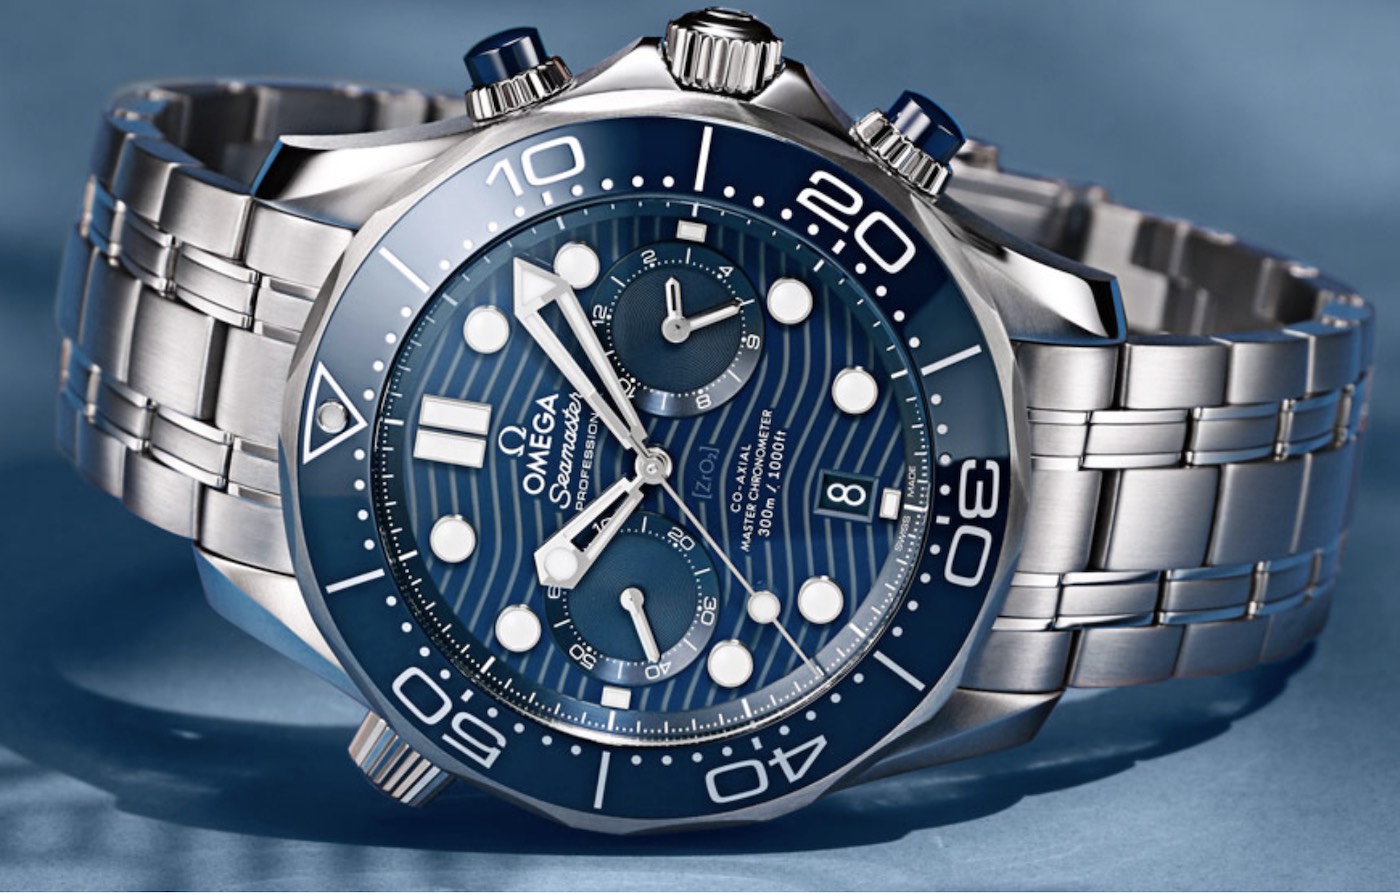 omega seamaster chronograph price